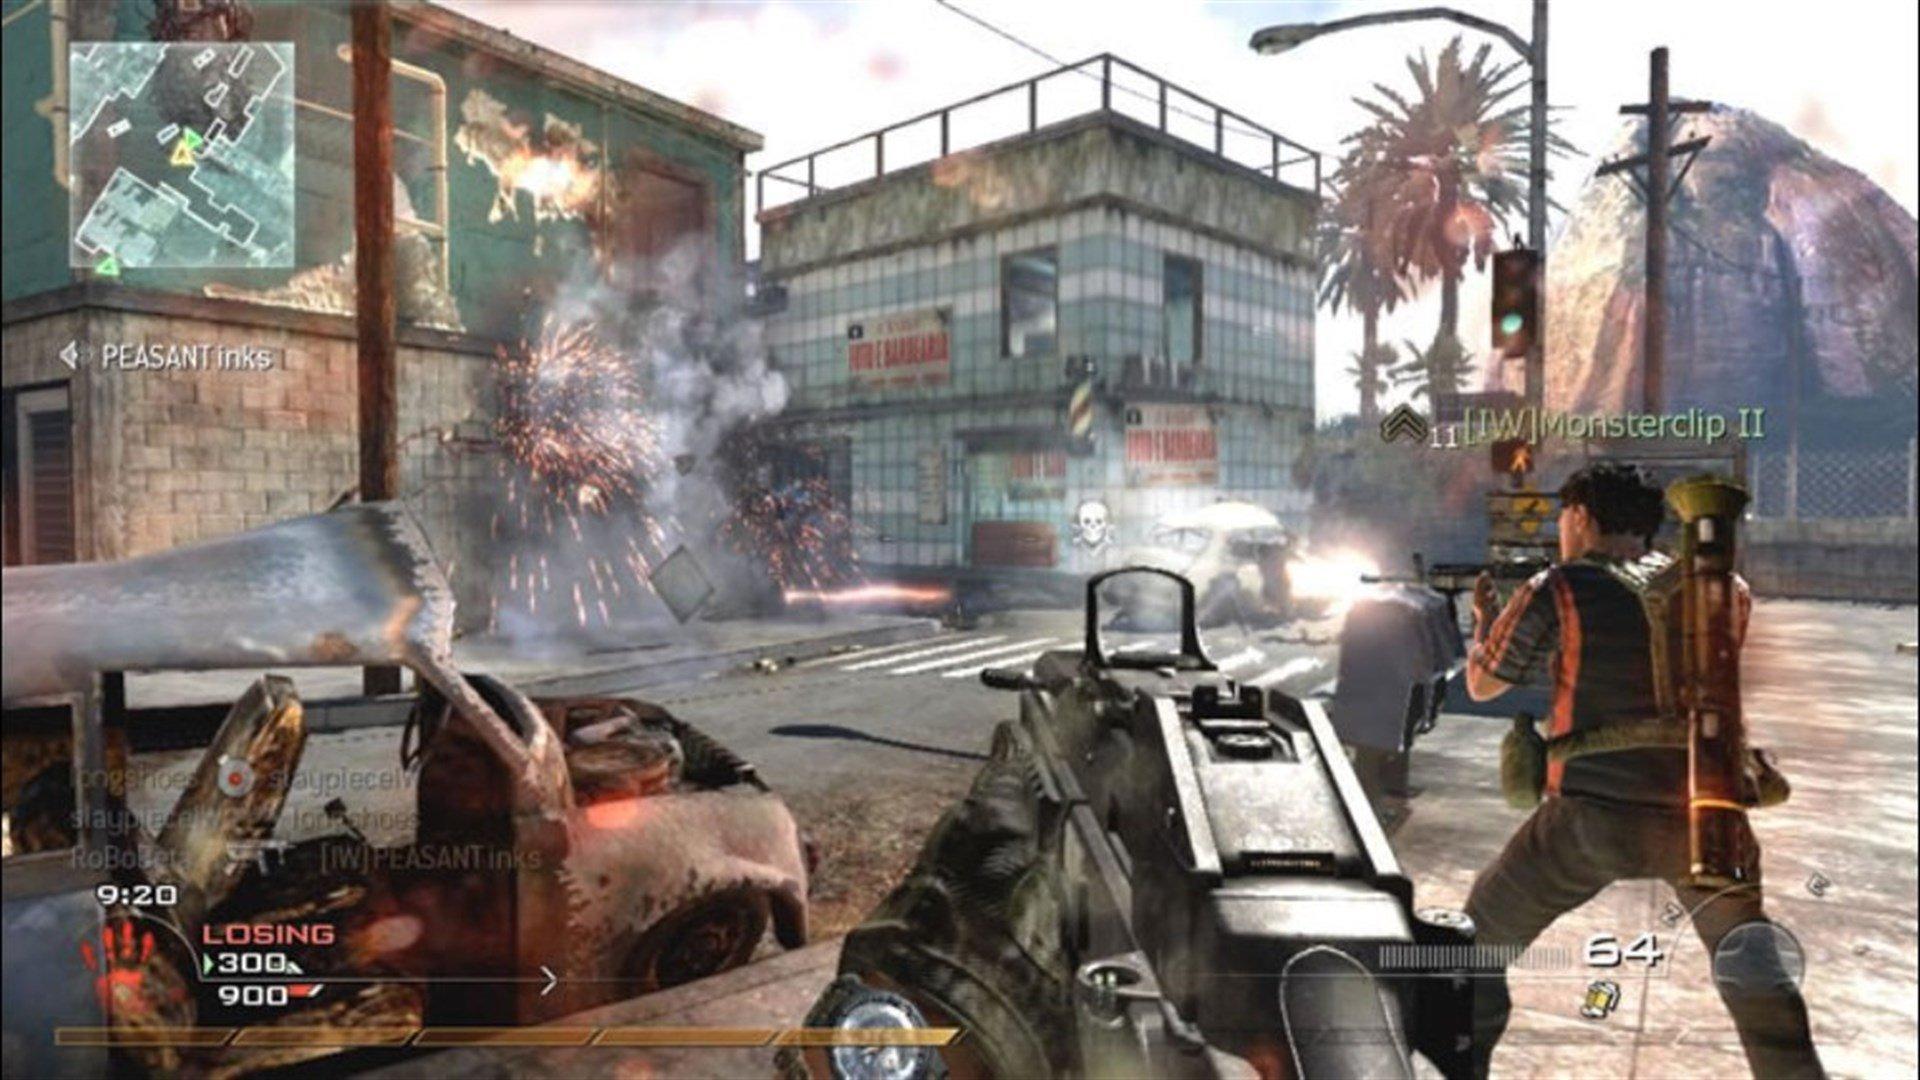 Call Of Duty 1-4 Modern Warfare Black Ops CIB Lot Of 4 PS3 Games  Playstation 3